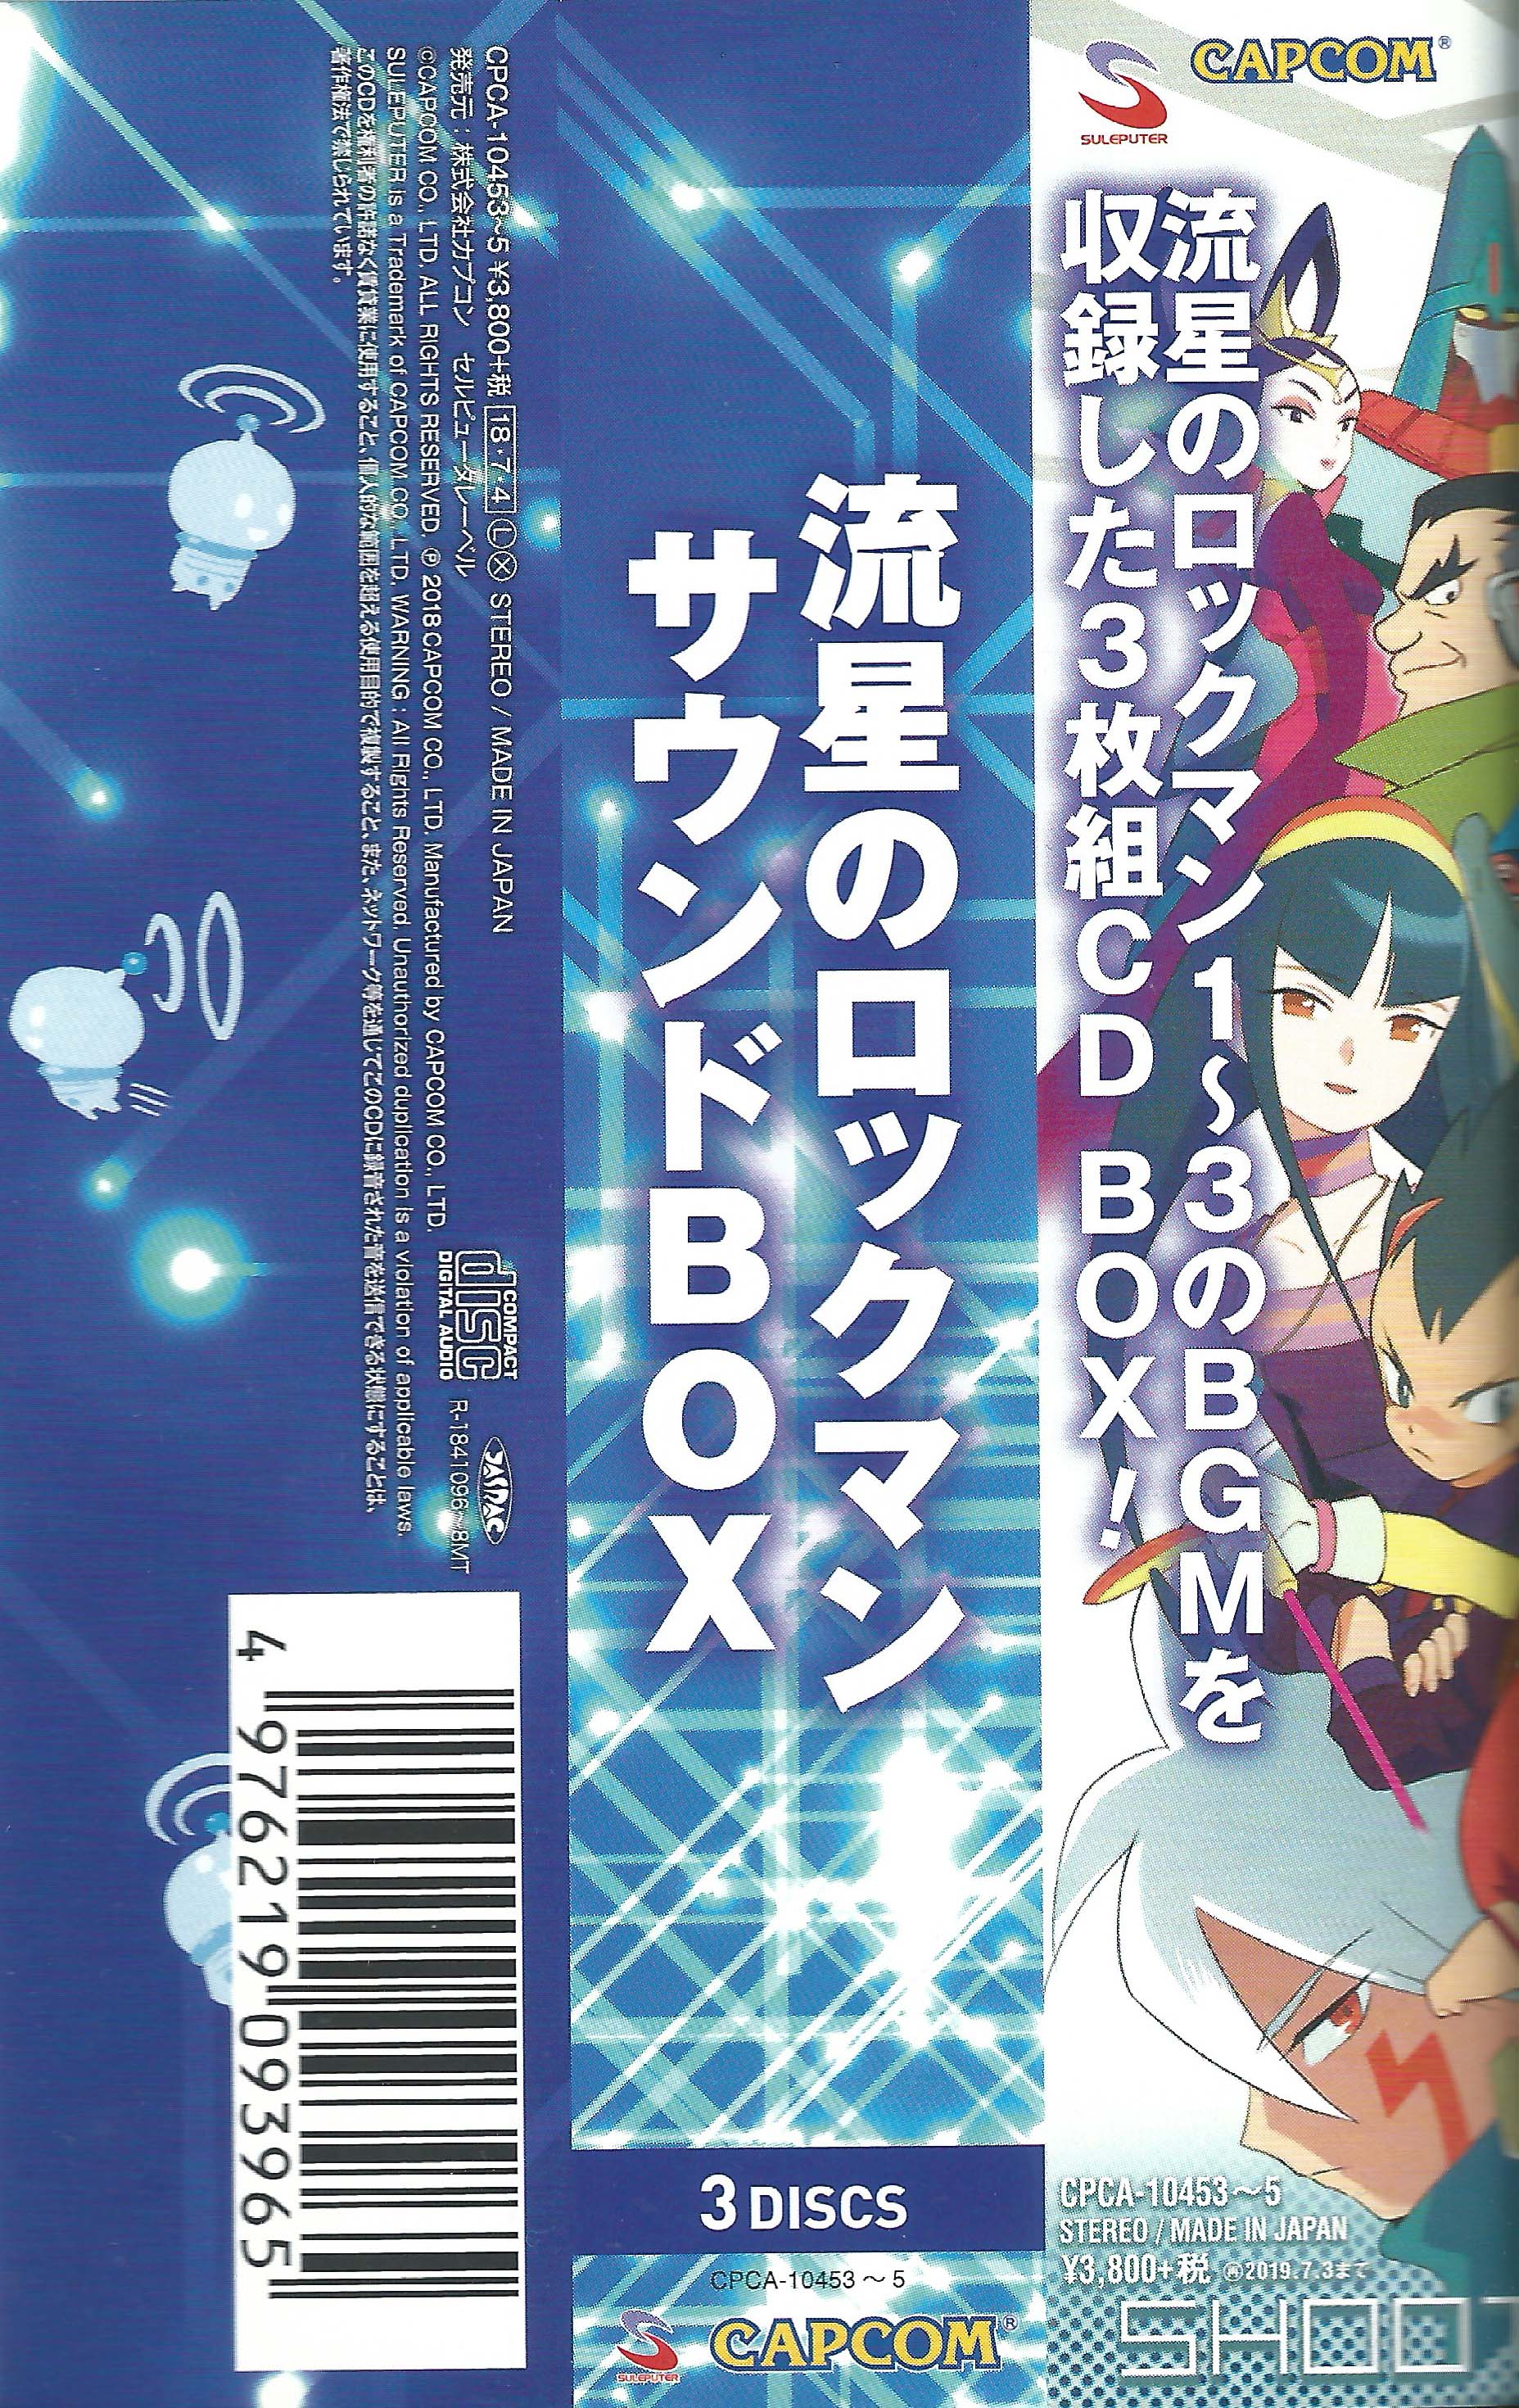 Release “Shooting Star Rockman Sound Box” by 青木佳乃 - Cover Art 